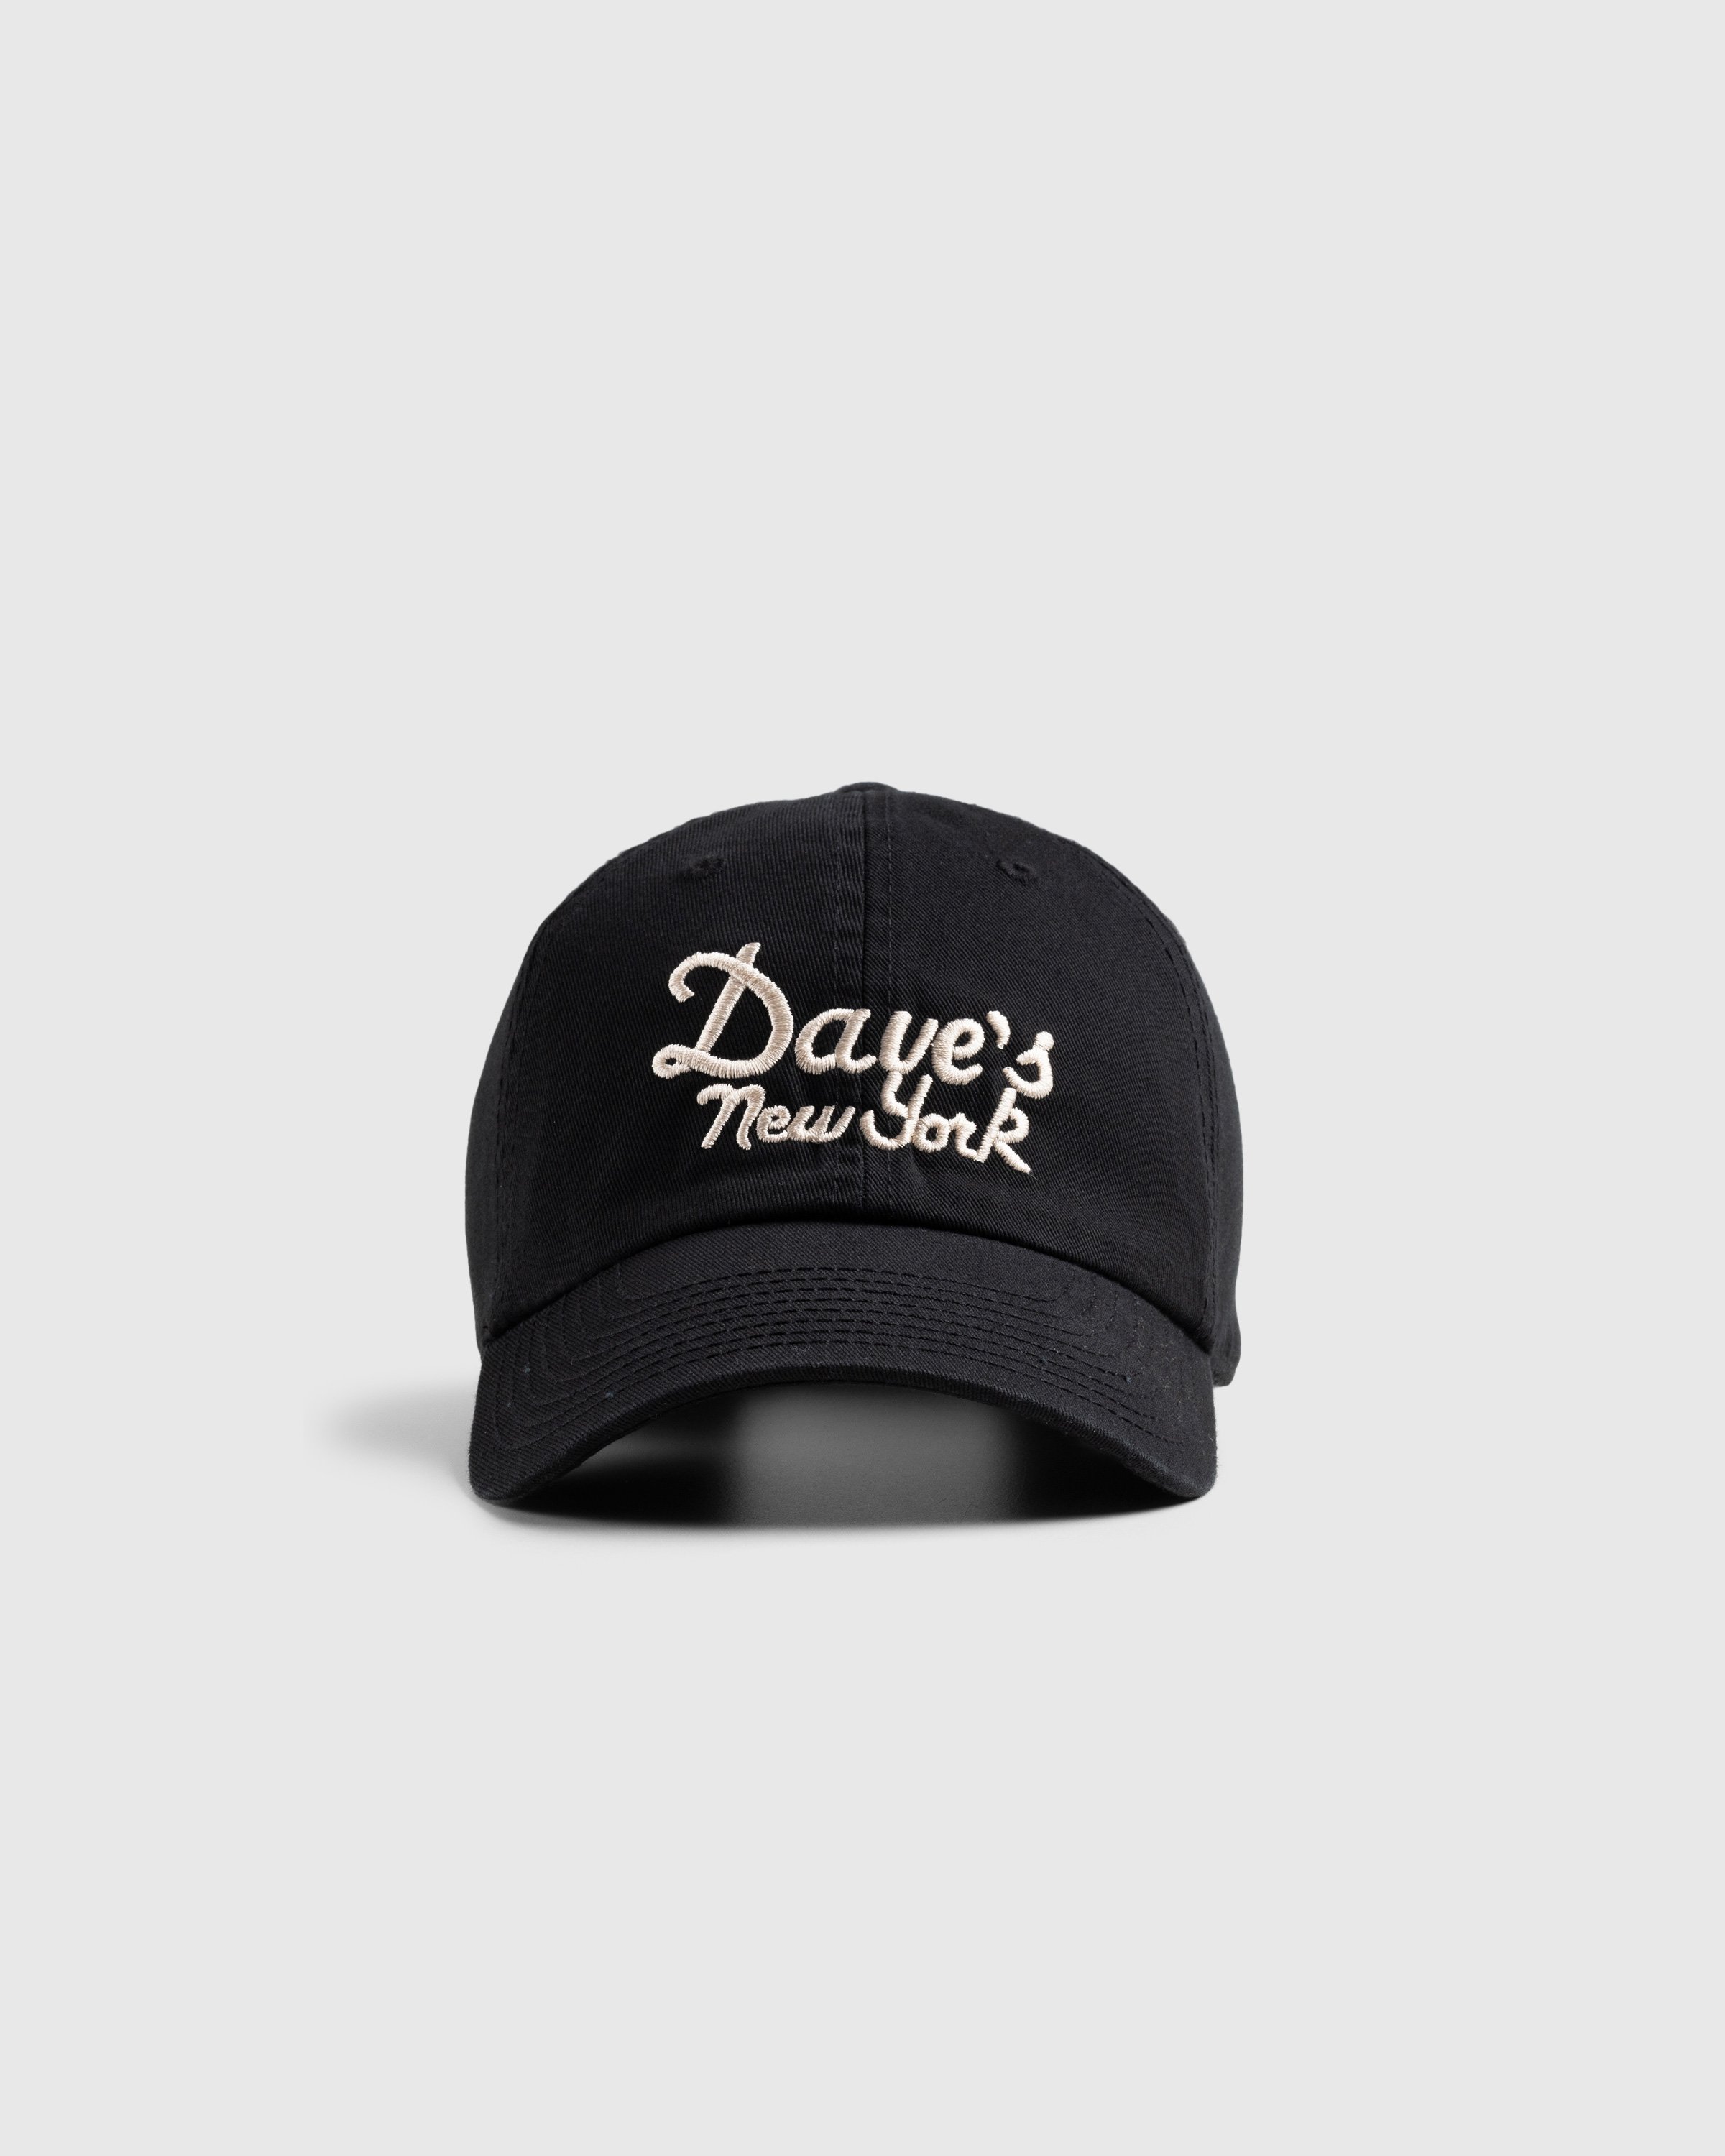 Dave's New York x Highsnobiety - Black Cap - Accessories - Black - Image 3